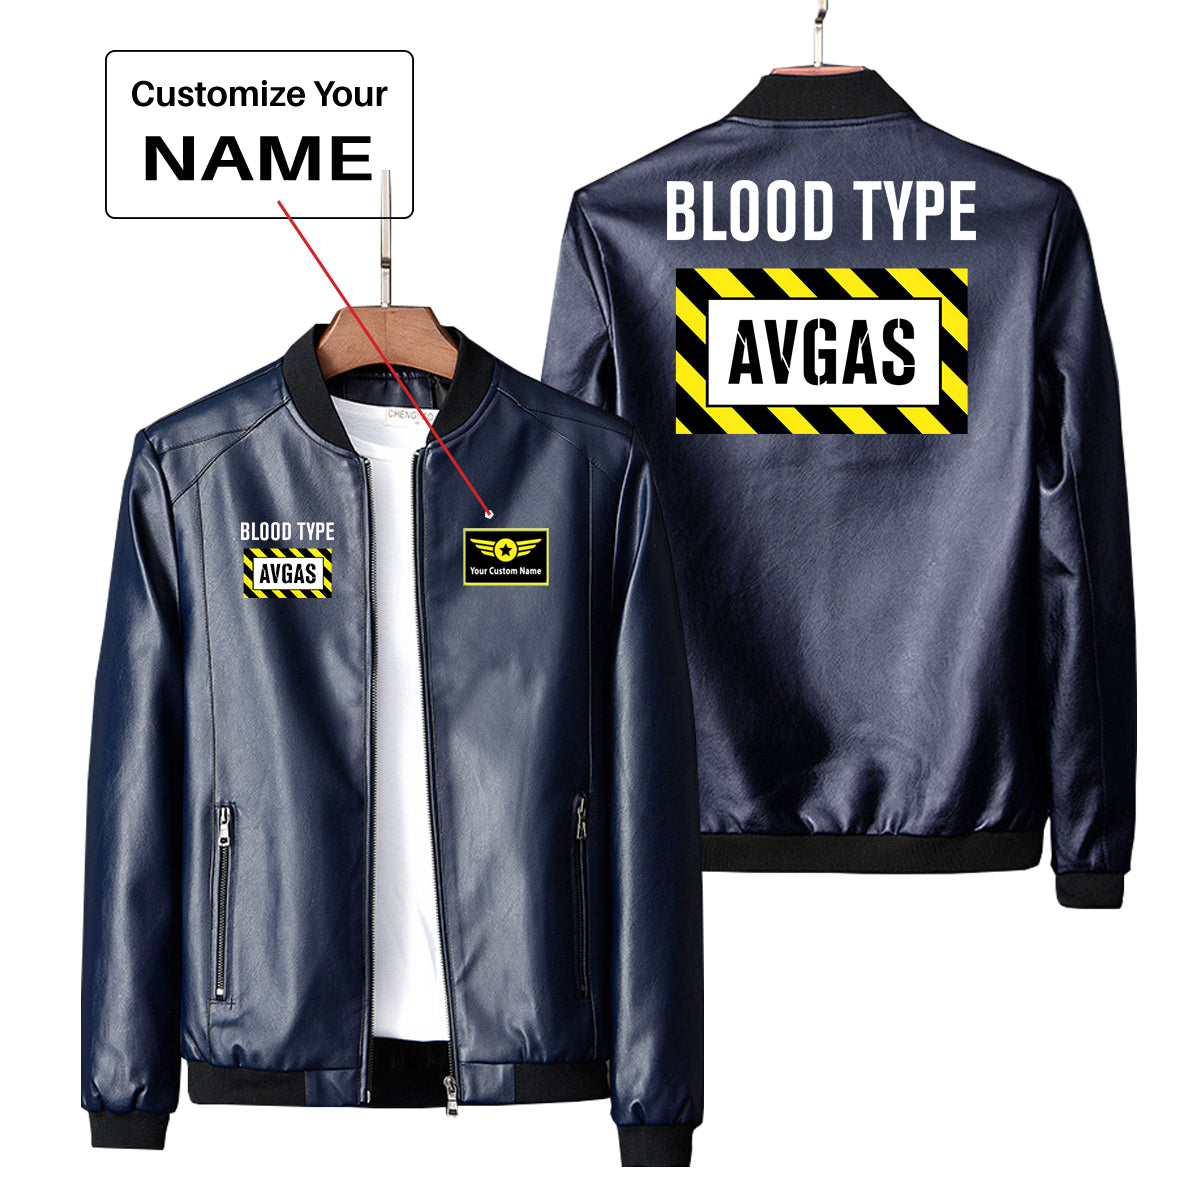 Blood Type AVGAS Designed PU Leather Jackets